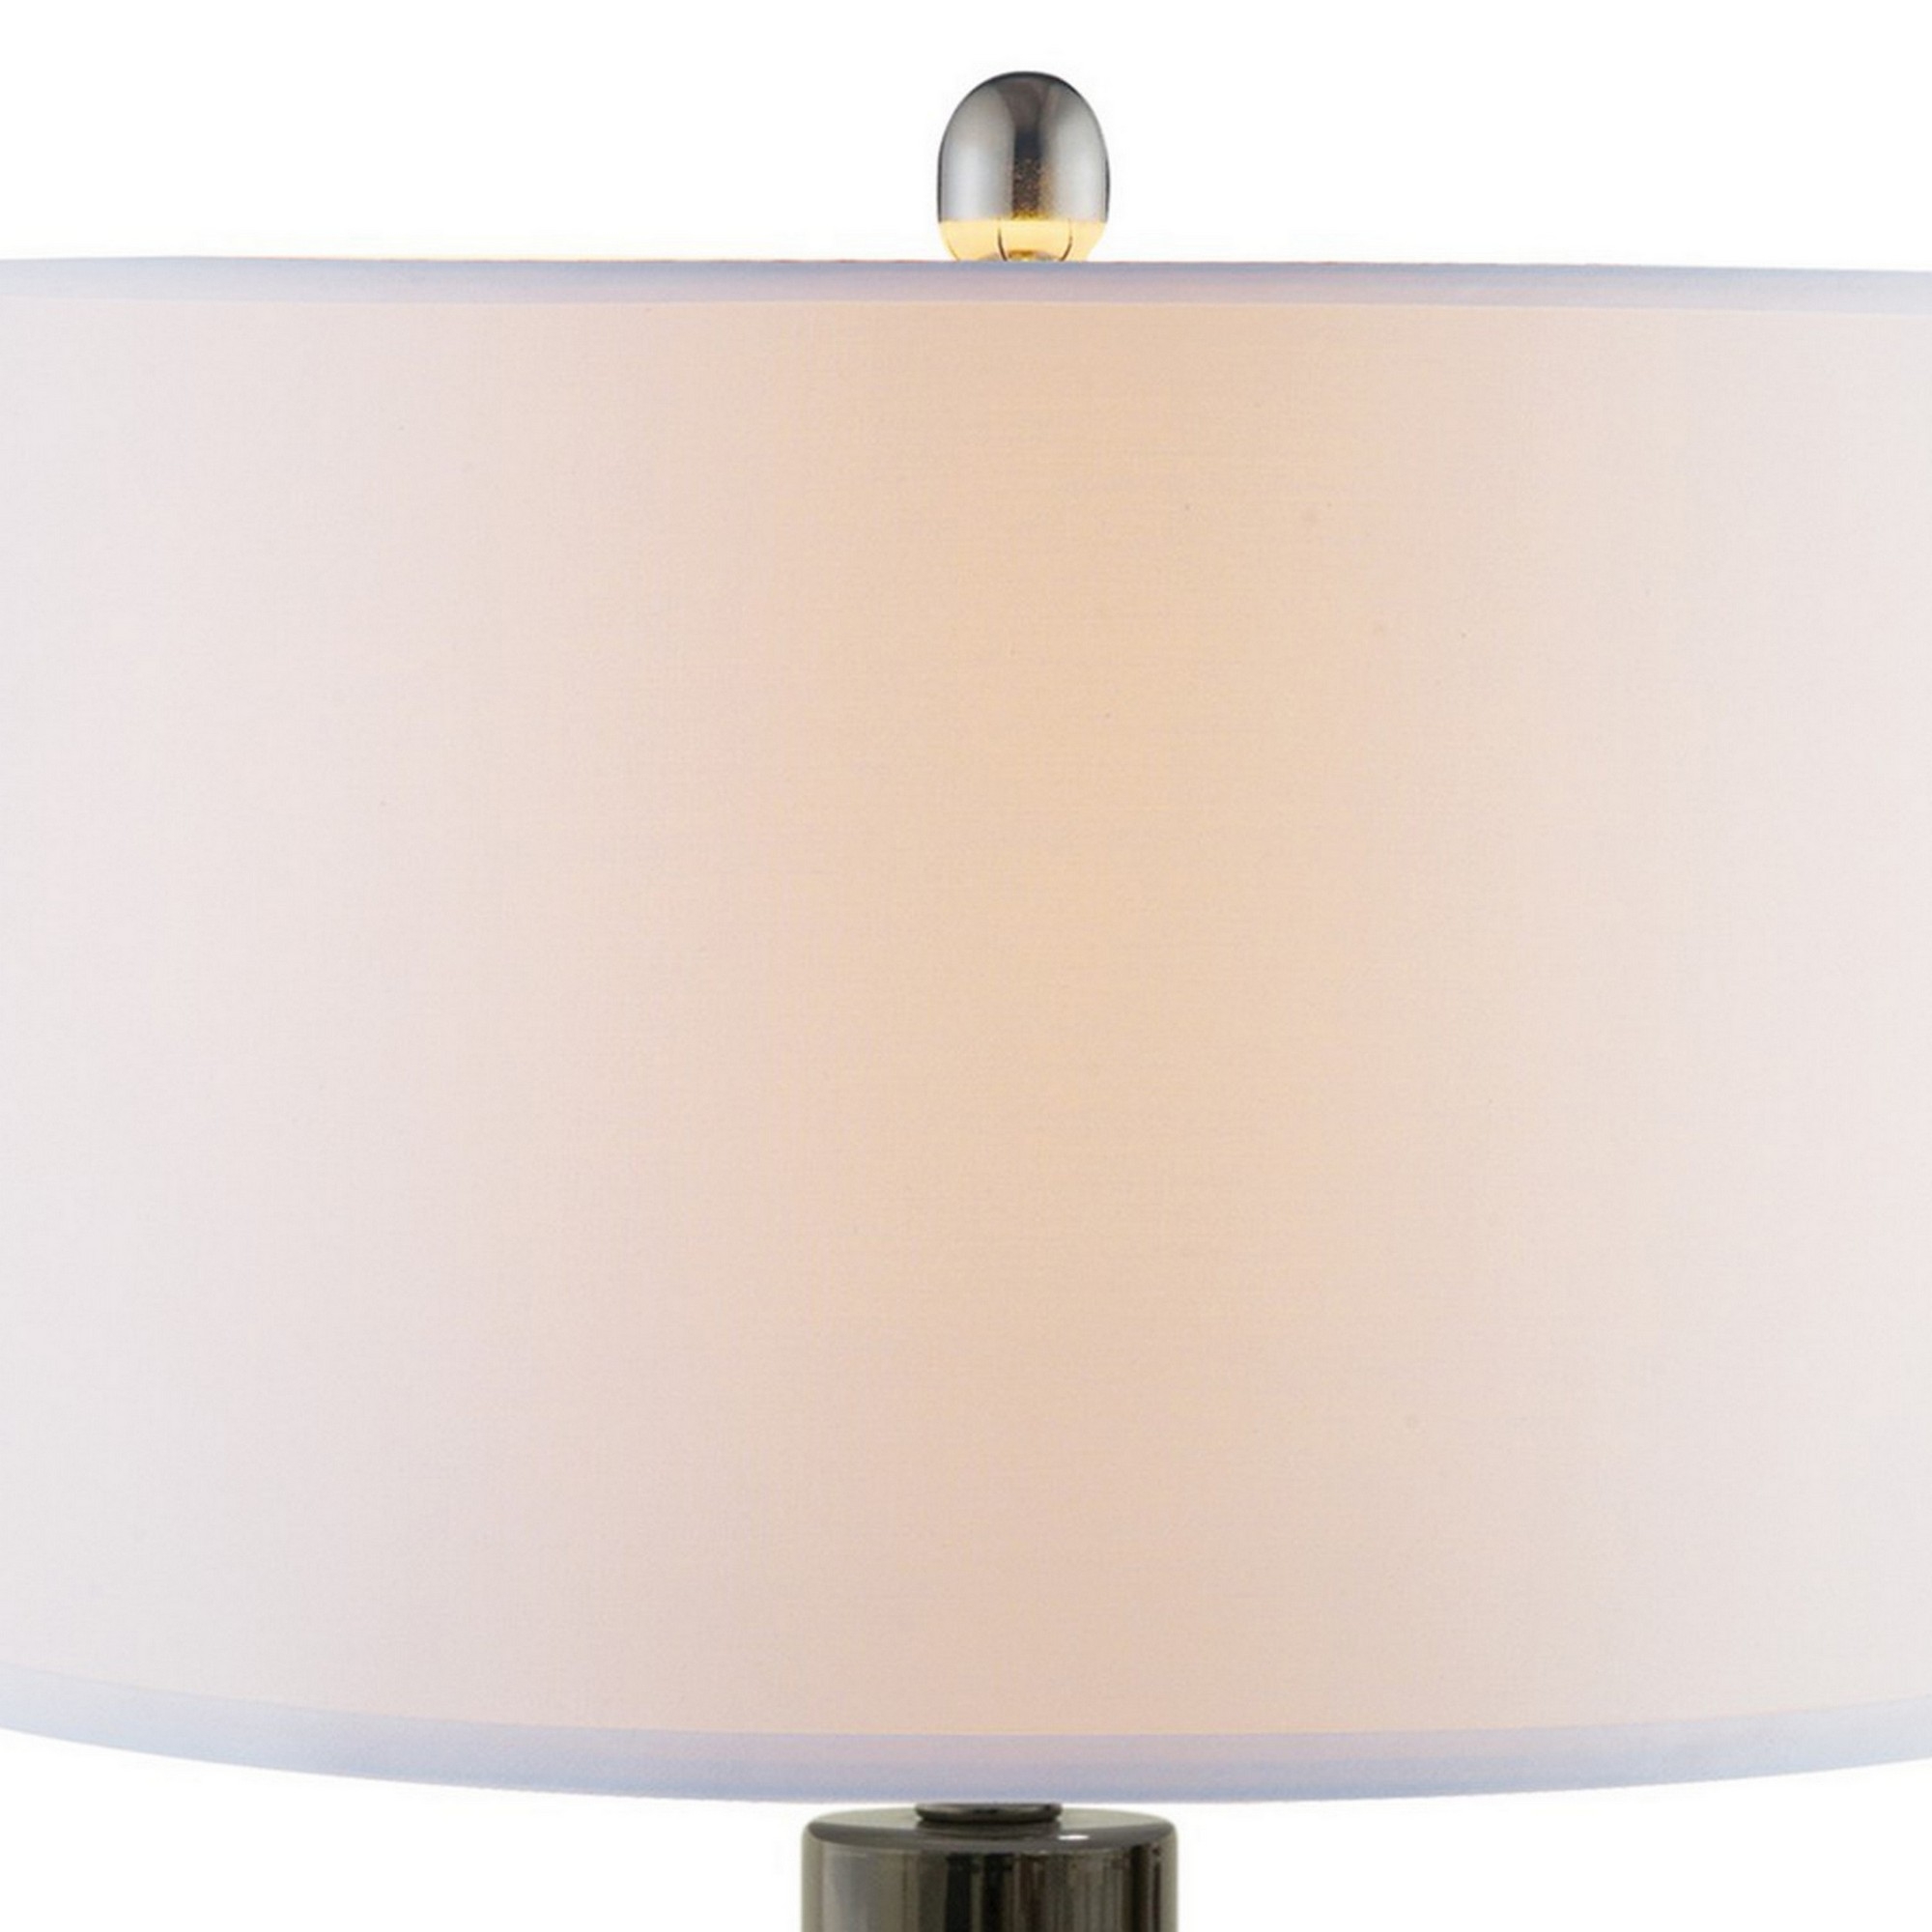 26 Inch Table Lamp, LED Night Light Base, Empire Shade, Silver Gray -Saltoro Sherpi